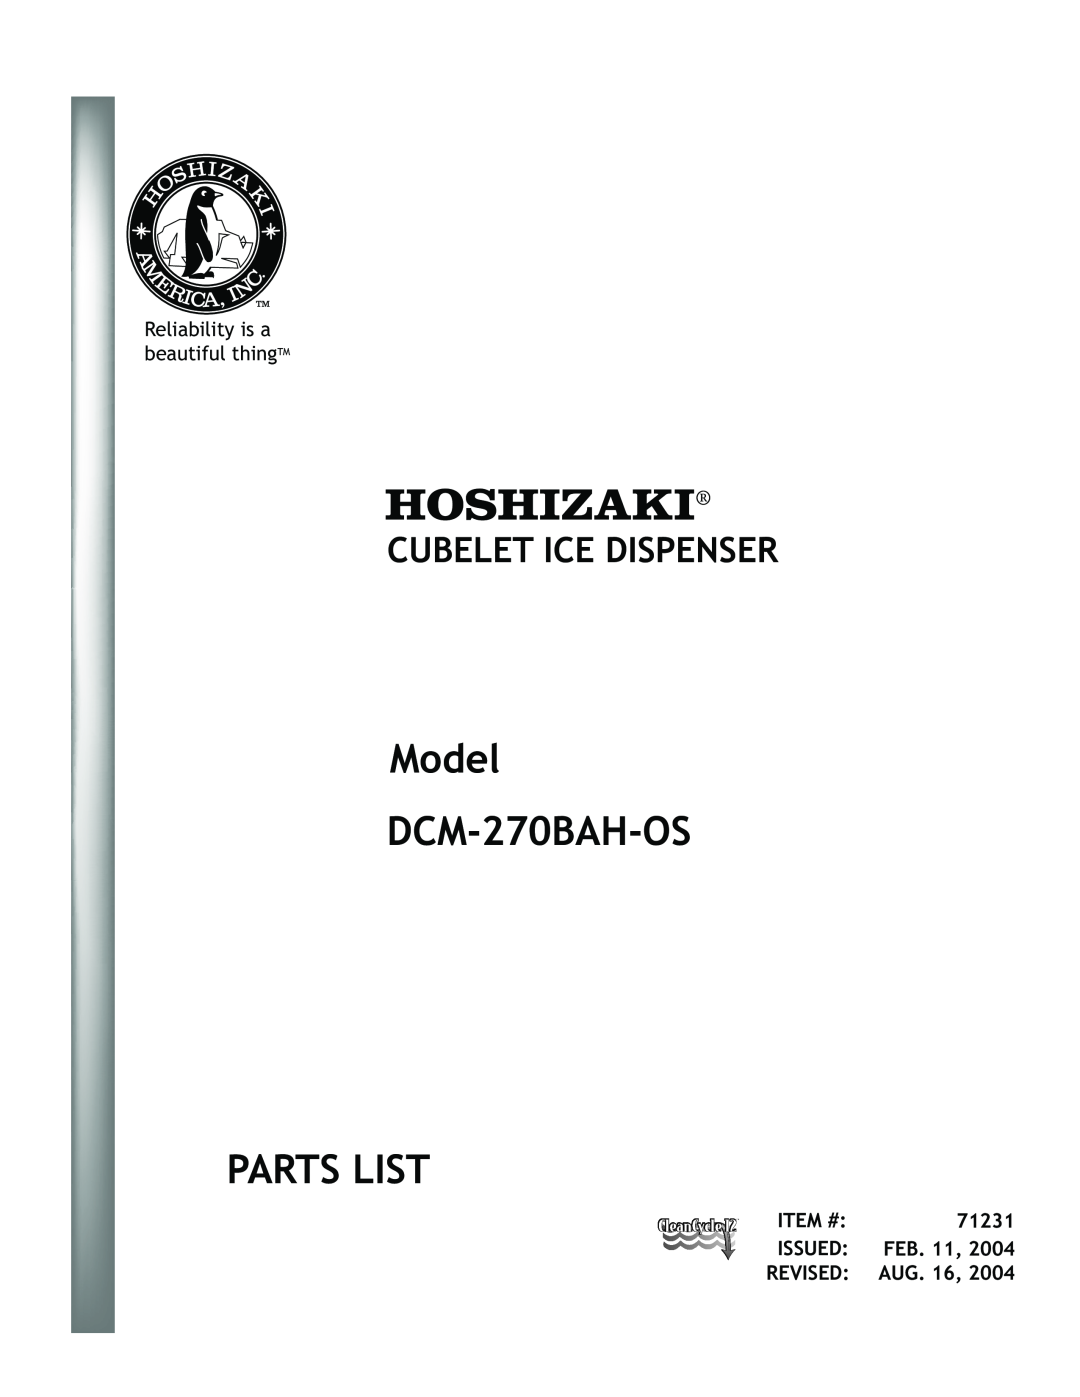 Hoshizaki manual Model DCM-270BAH-OS PARTS LIST, Cubelet Ice Dispenser, Reliability is a beautiful thingTM, Item # 